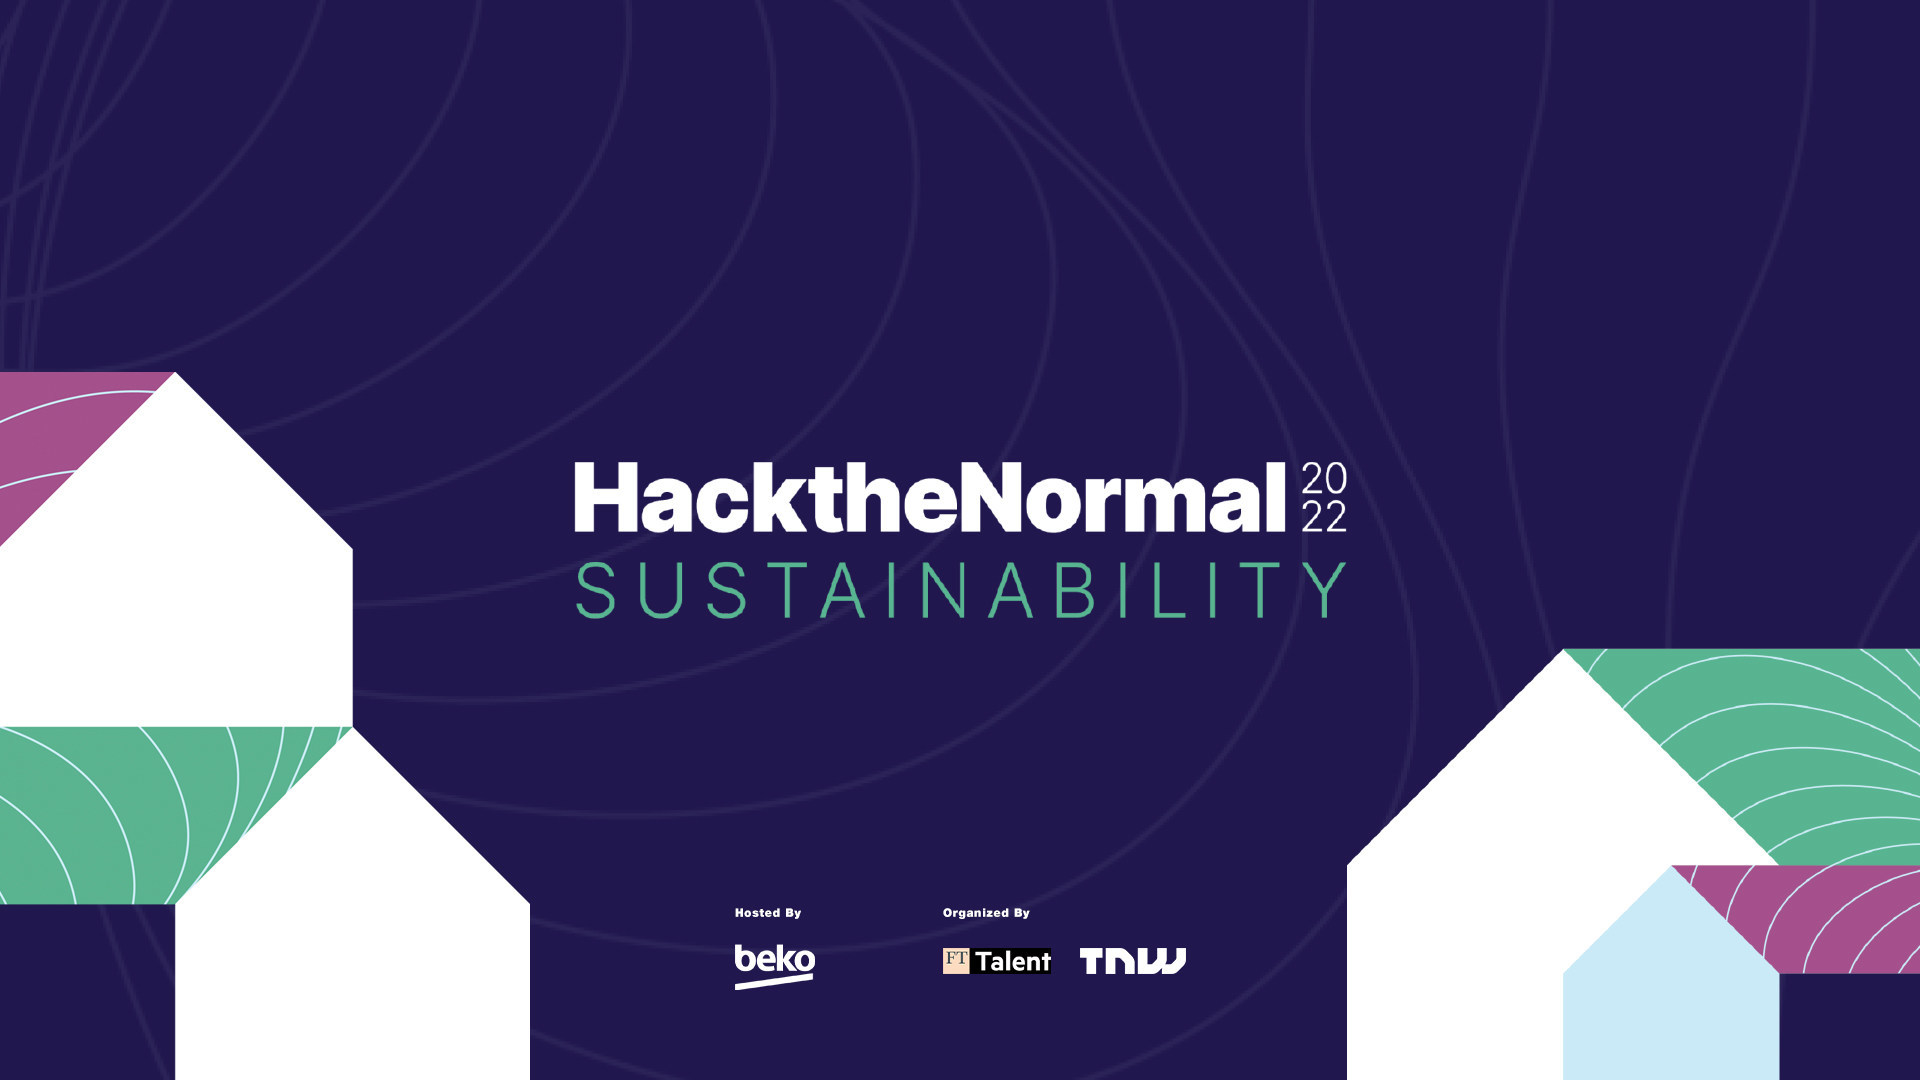 Bekos Hack the Normal Sustainability hackathon winners announced